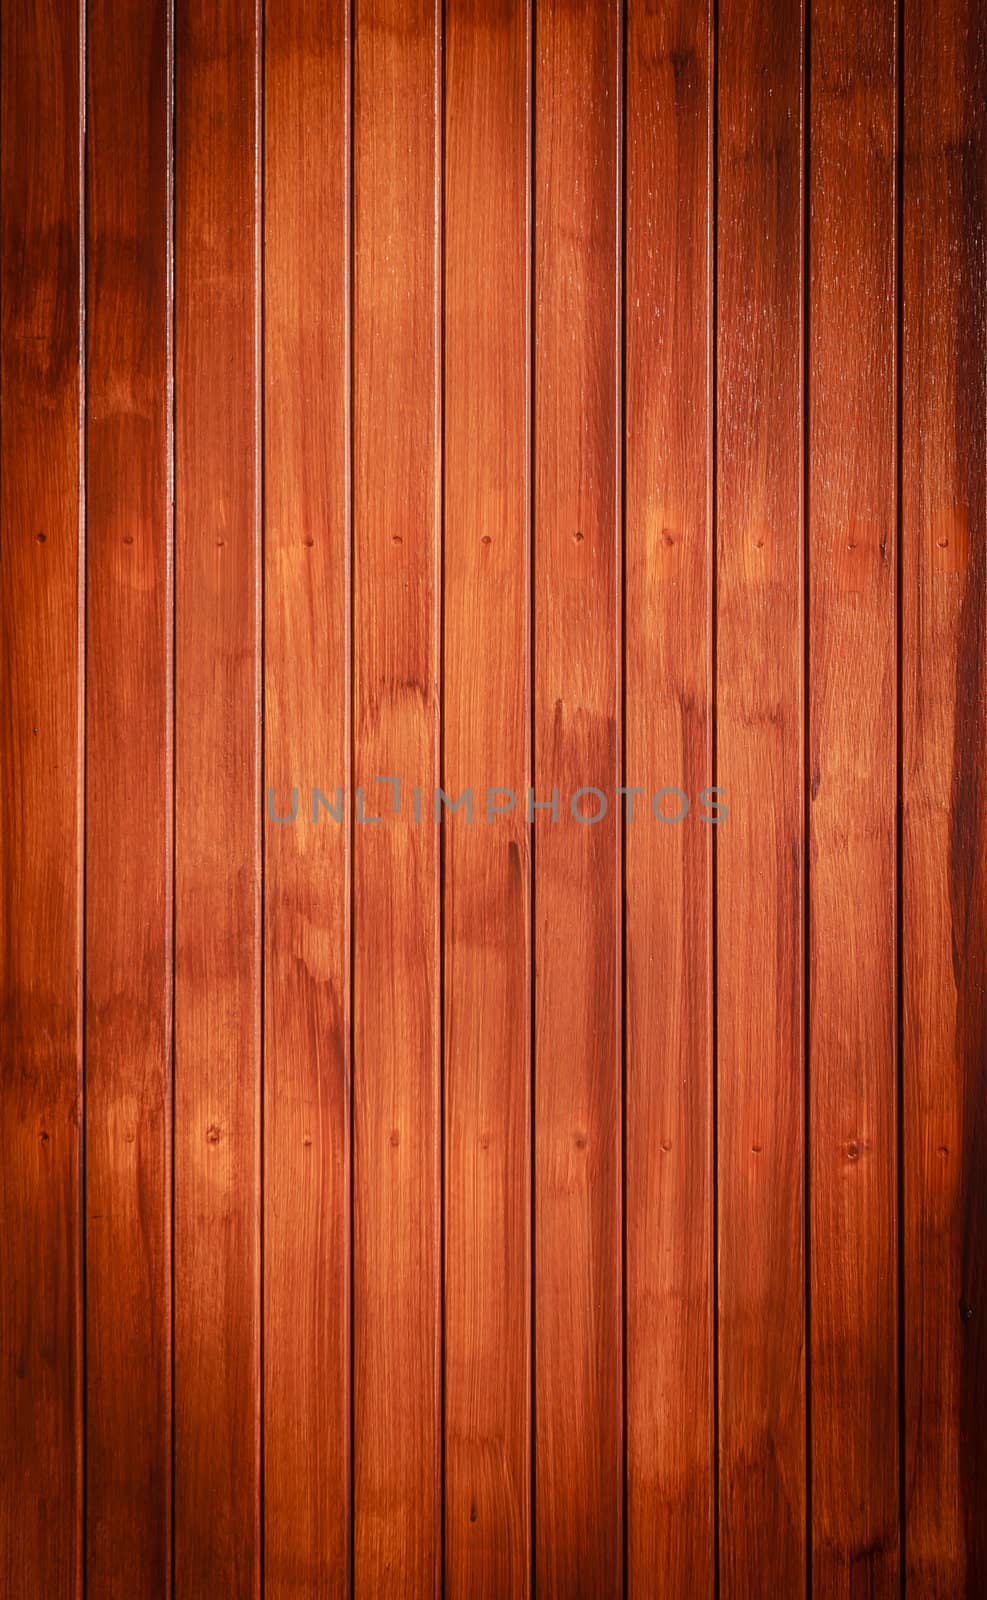 Dark Brown Wood Background, Vertical Pattern by punpleng